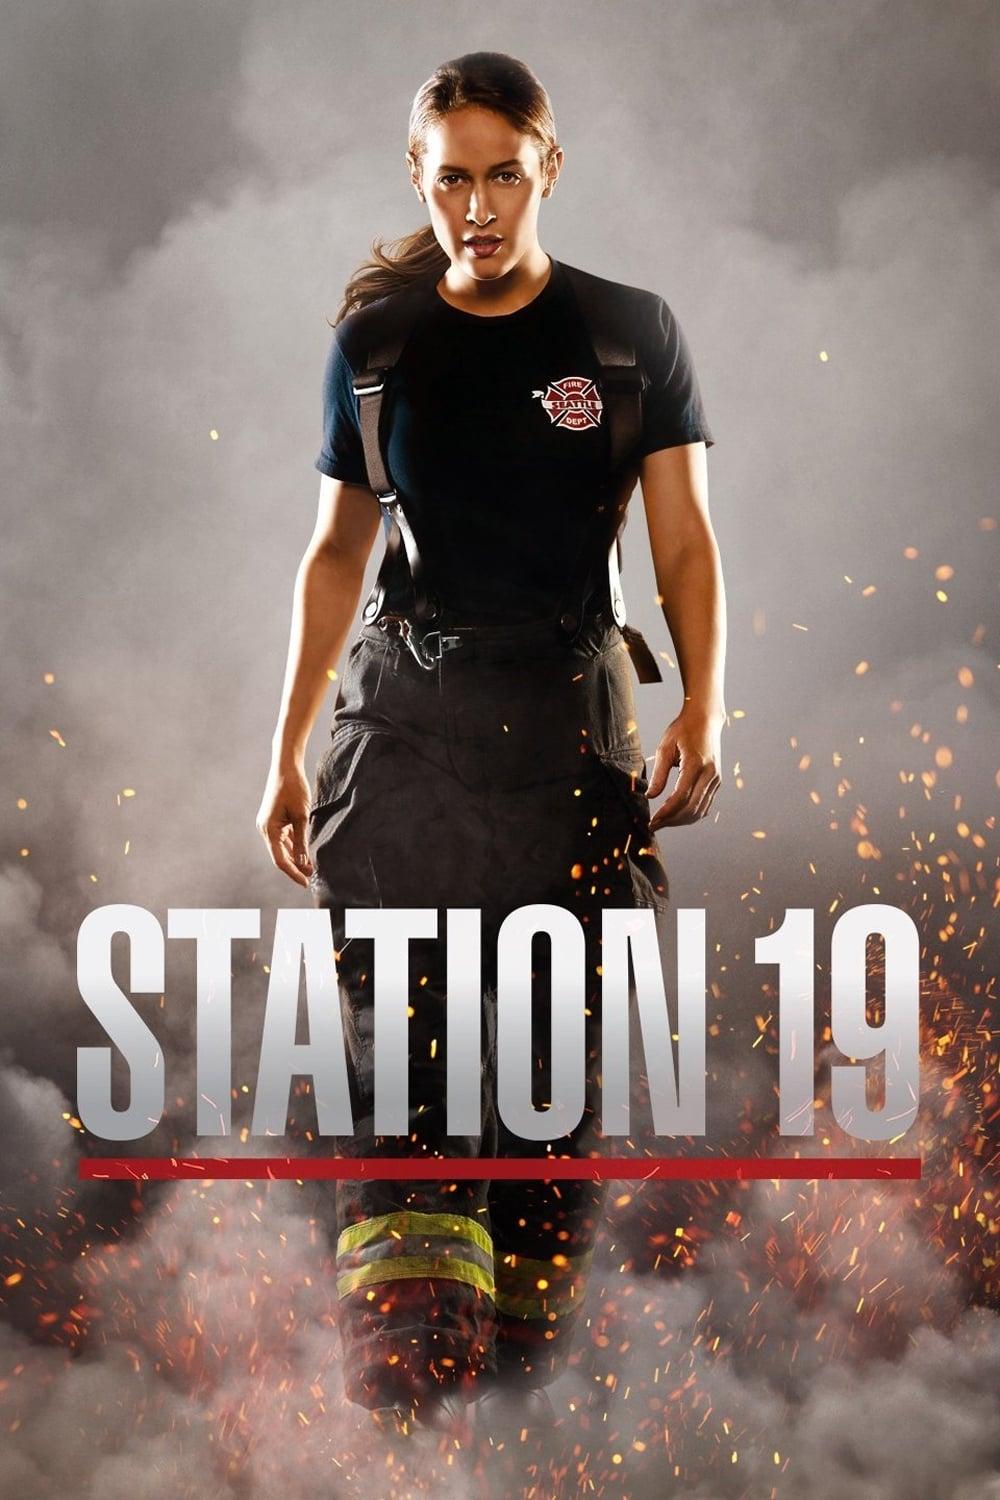 Station 19 poster